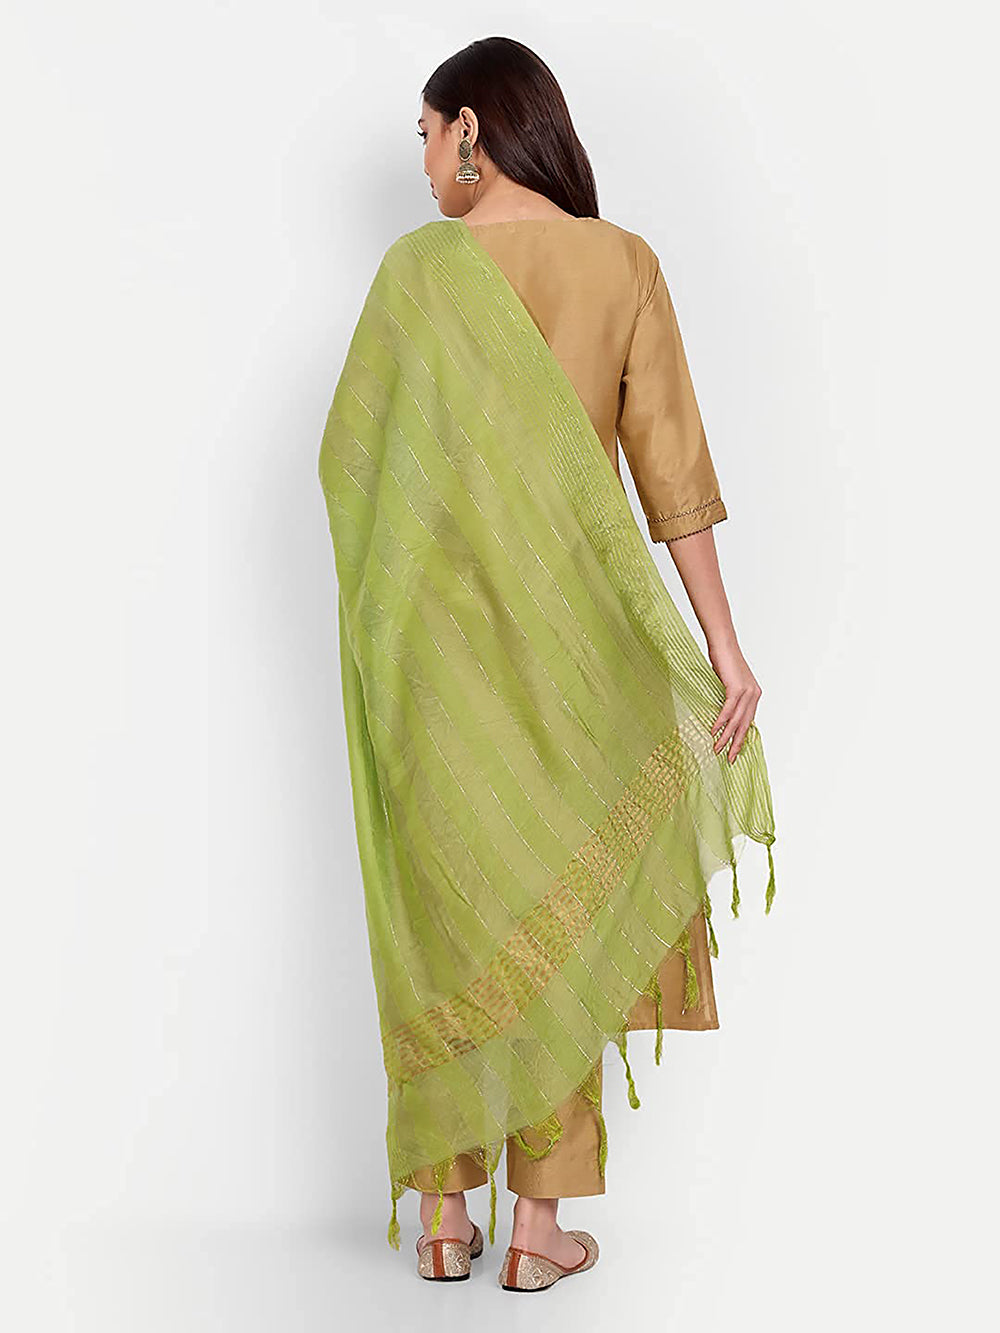 Women's Light Green Self Woven Gold Zari Striped Design Cotton Silk Dupatta With Tassles - NIMIDHYA